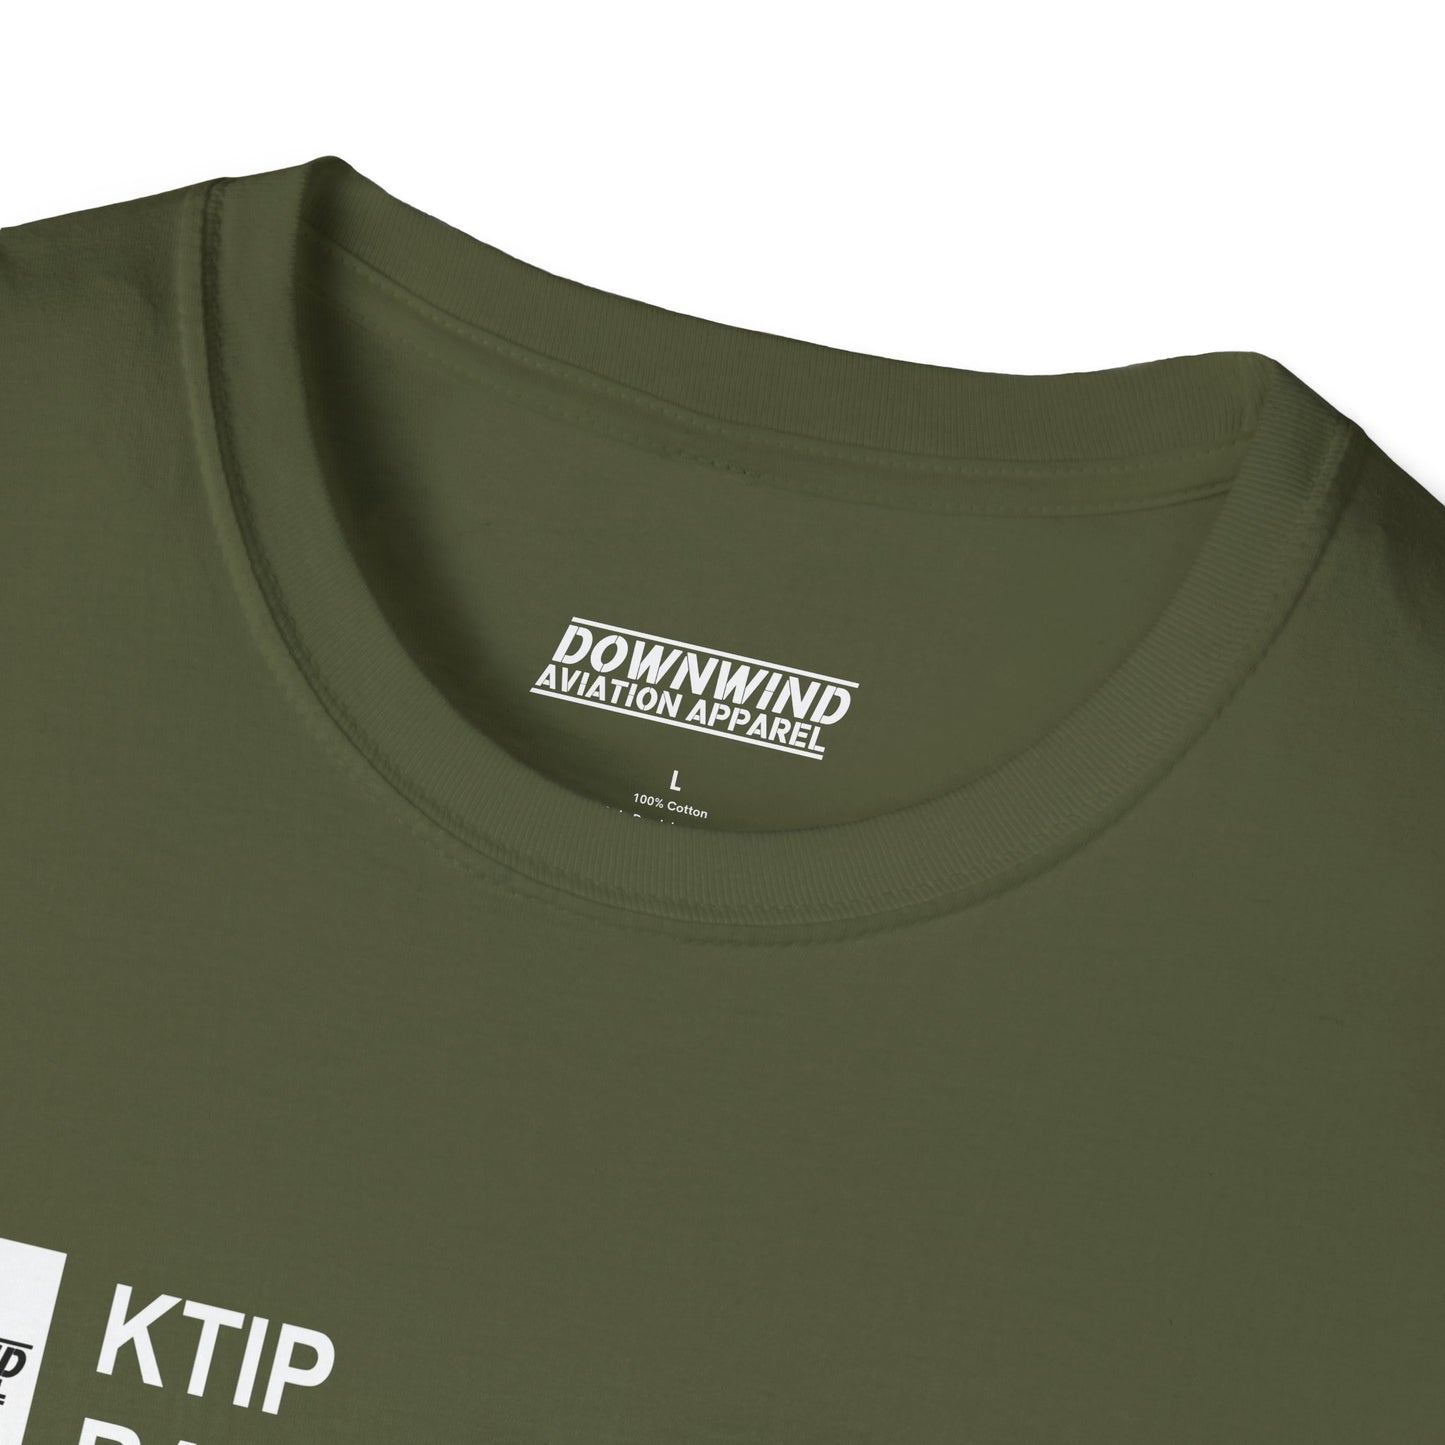 KTIP / Rantoul Airport T-Shirt